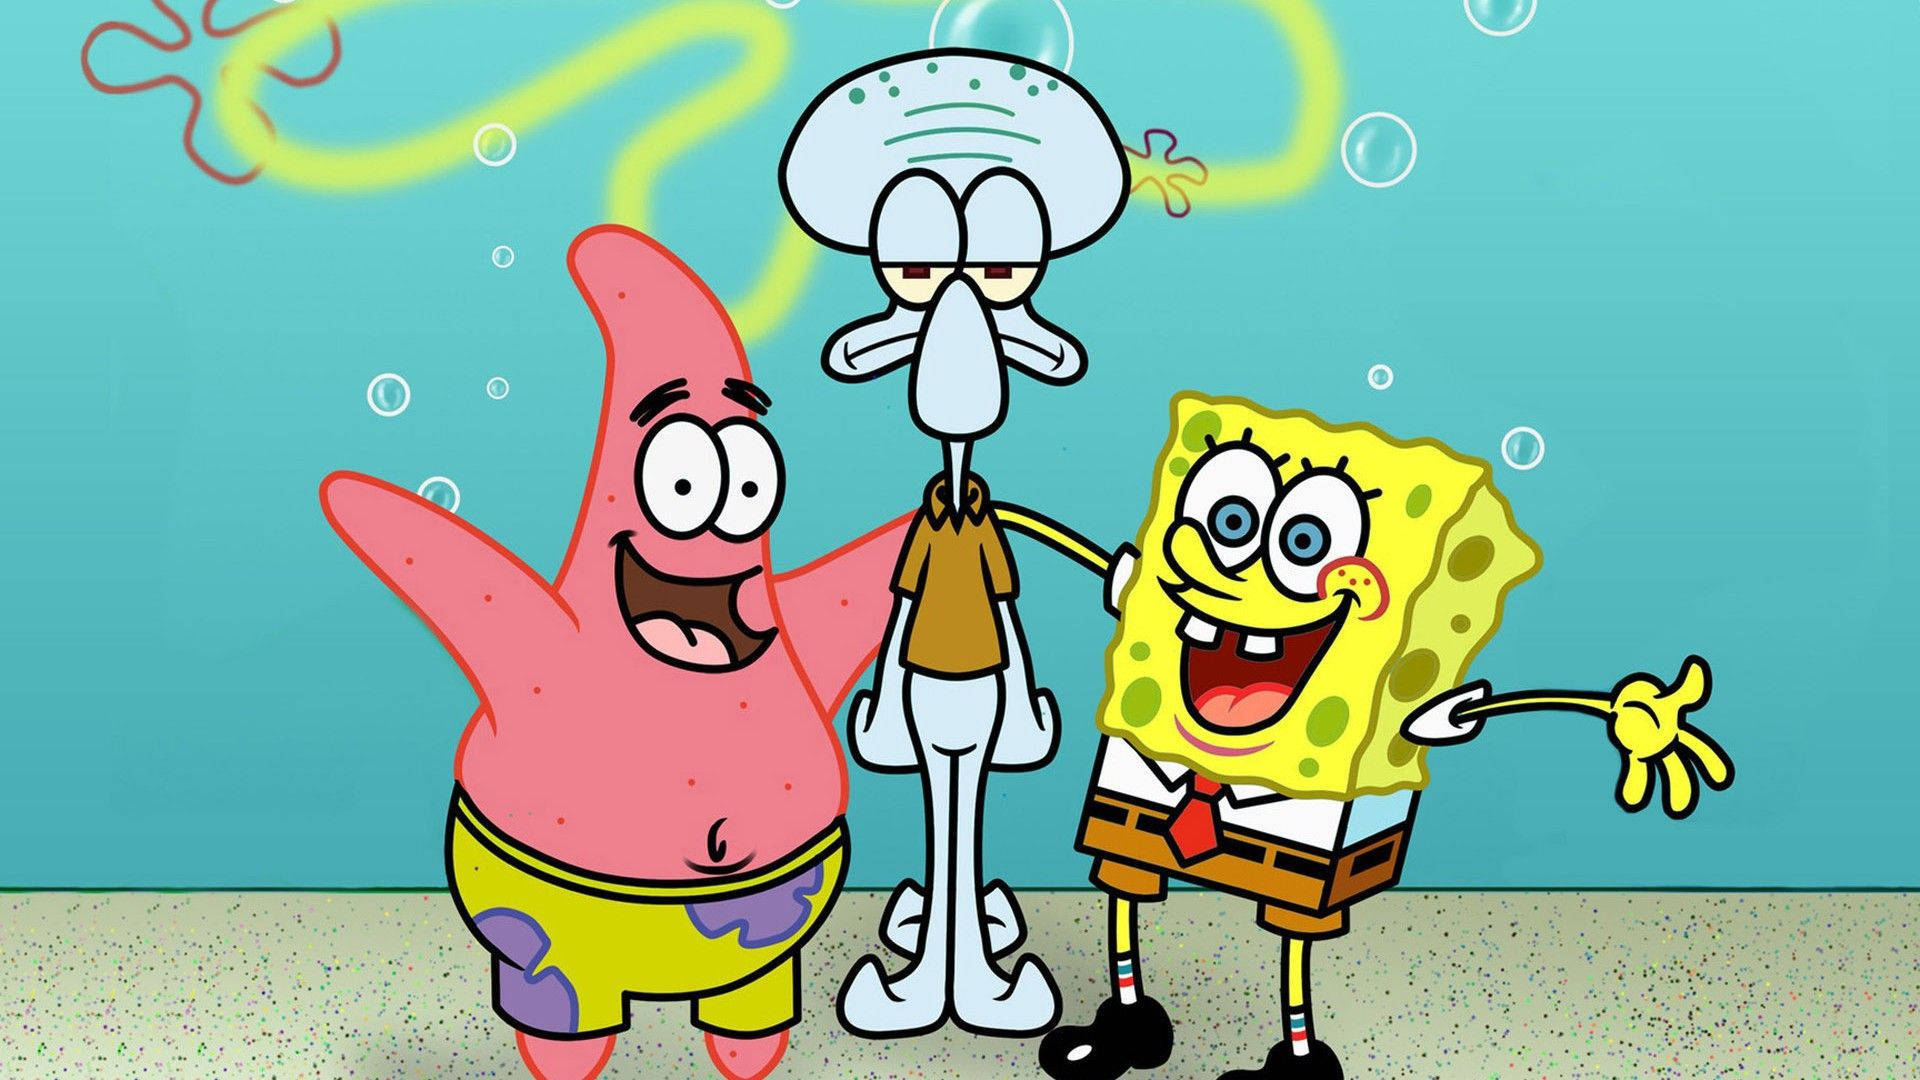 Cute Cartoon Spongebob, Patrick And Squidward Background